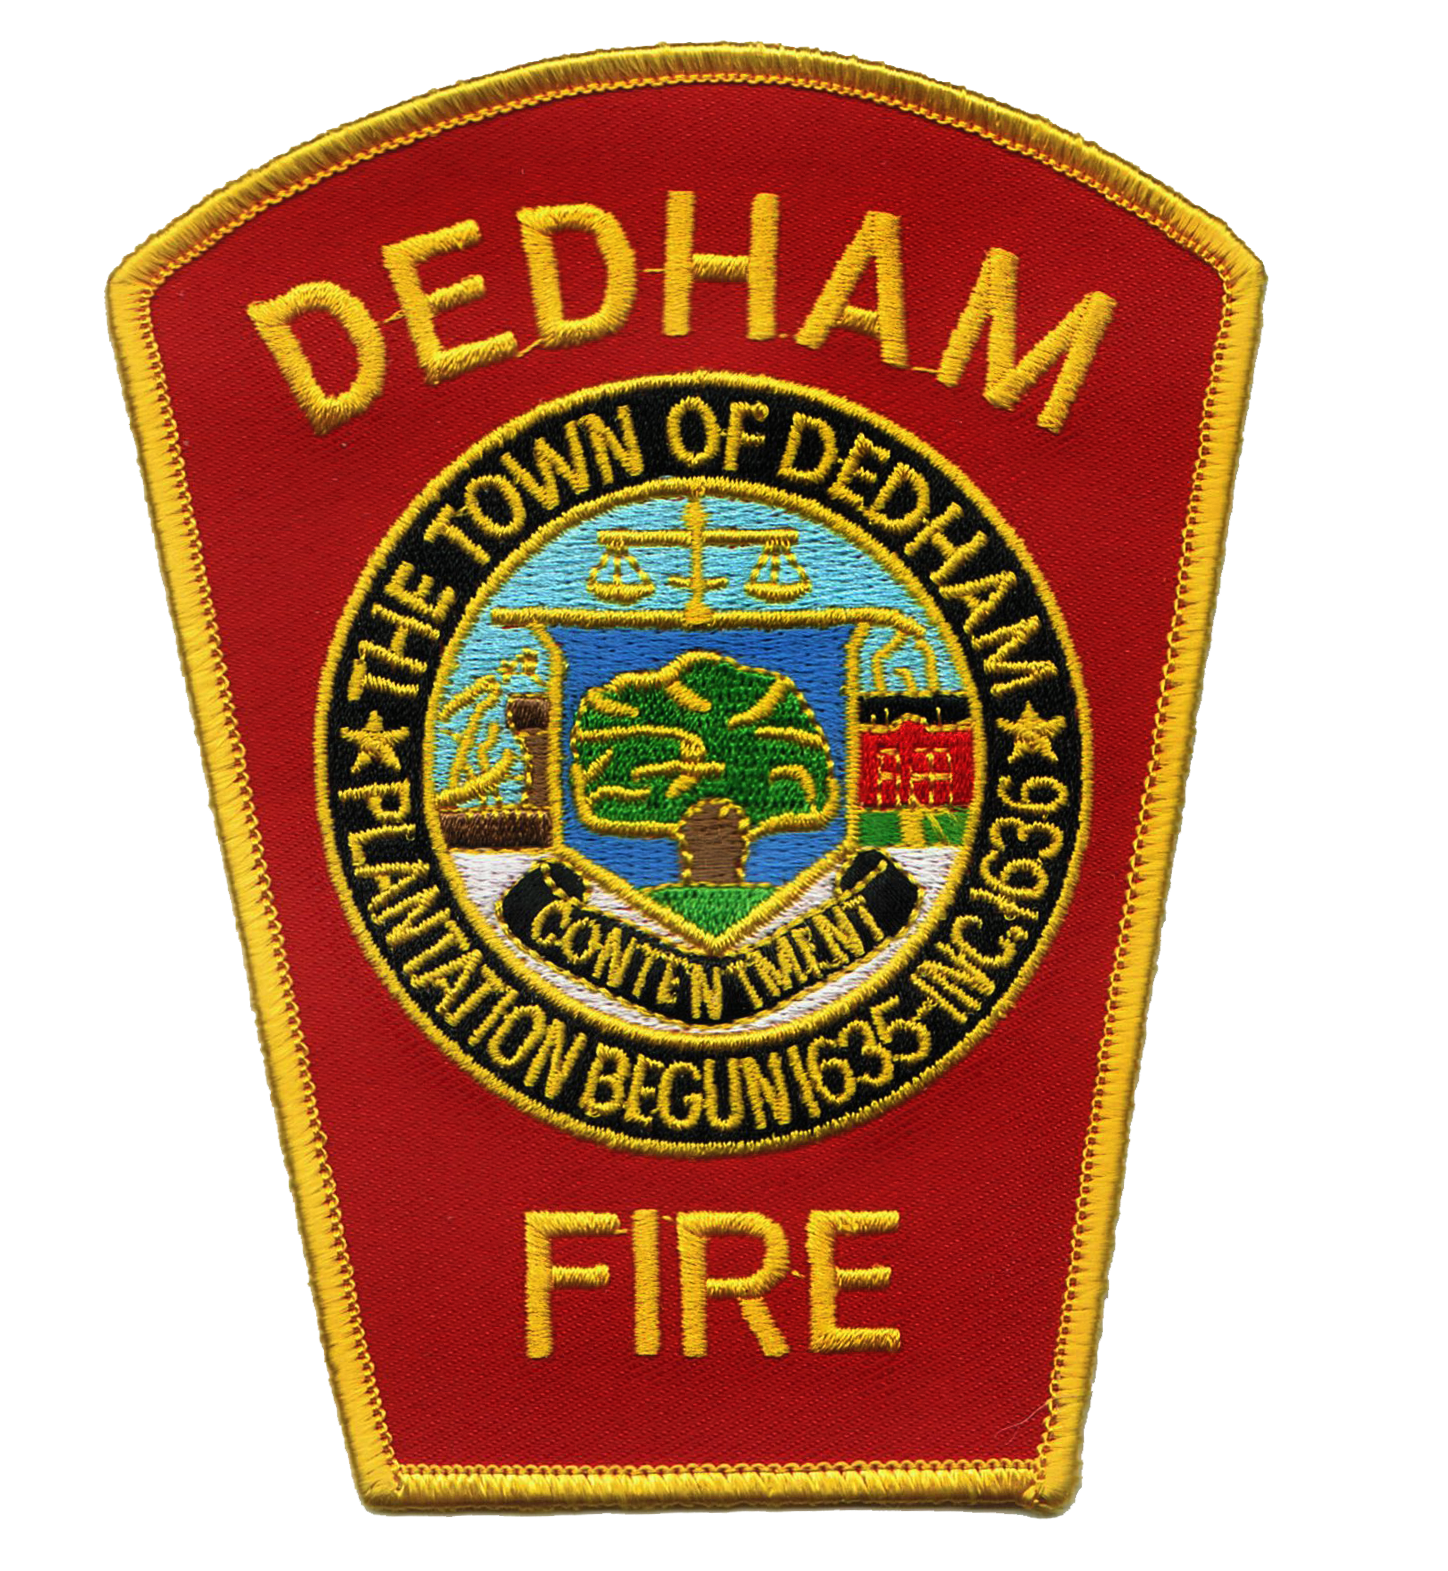 Dedham Fire Department Patch (JGPR)